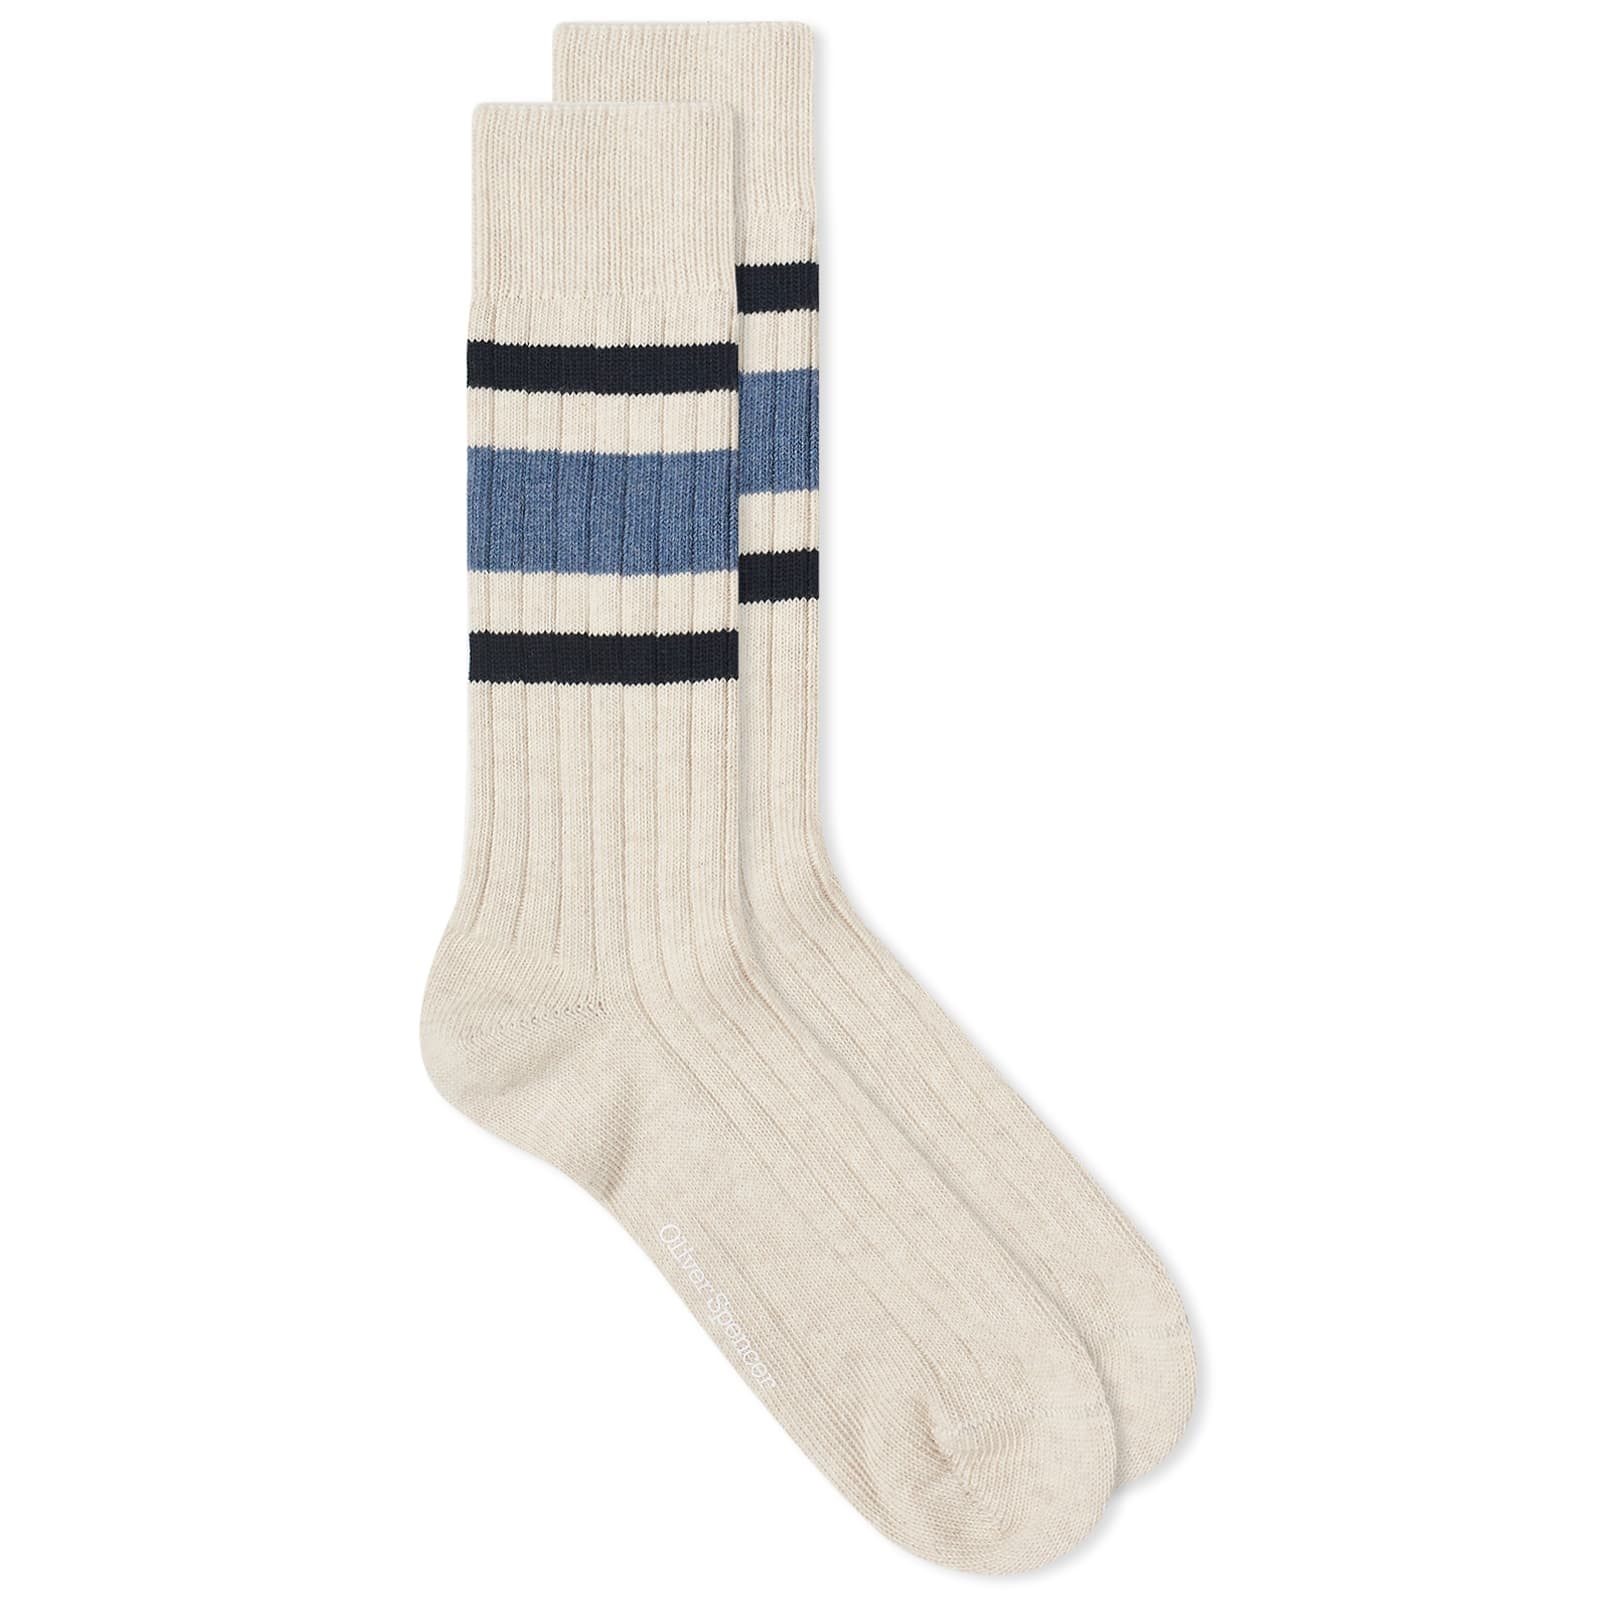 Oliver Spencer Polperro Socks - 1